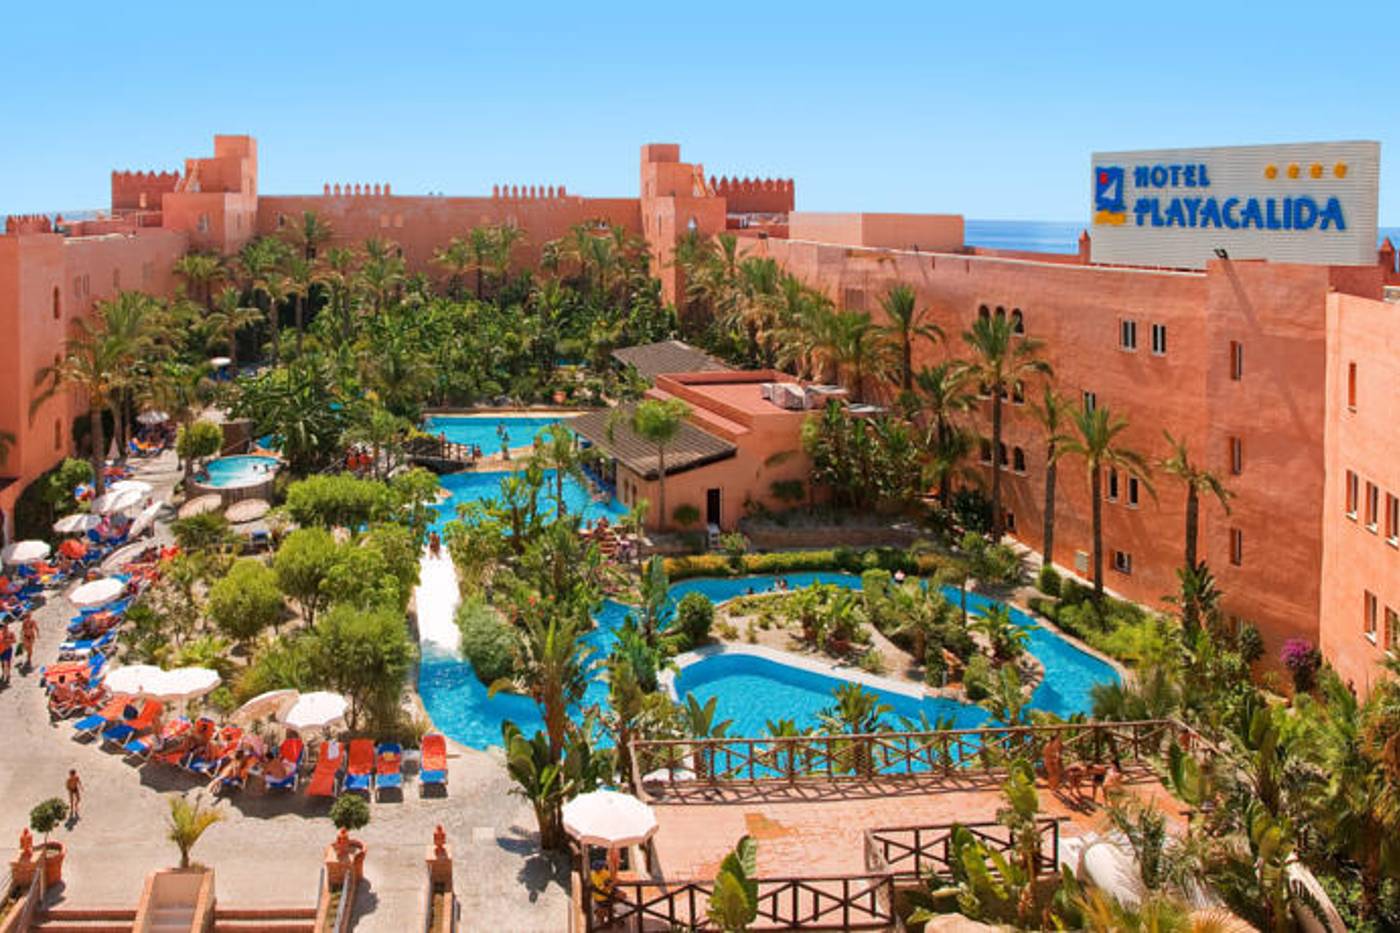 Playacalida Hotel Spa